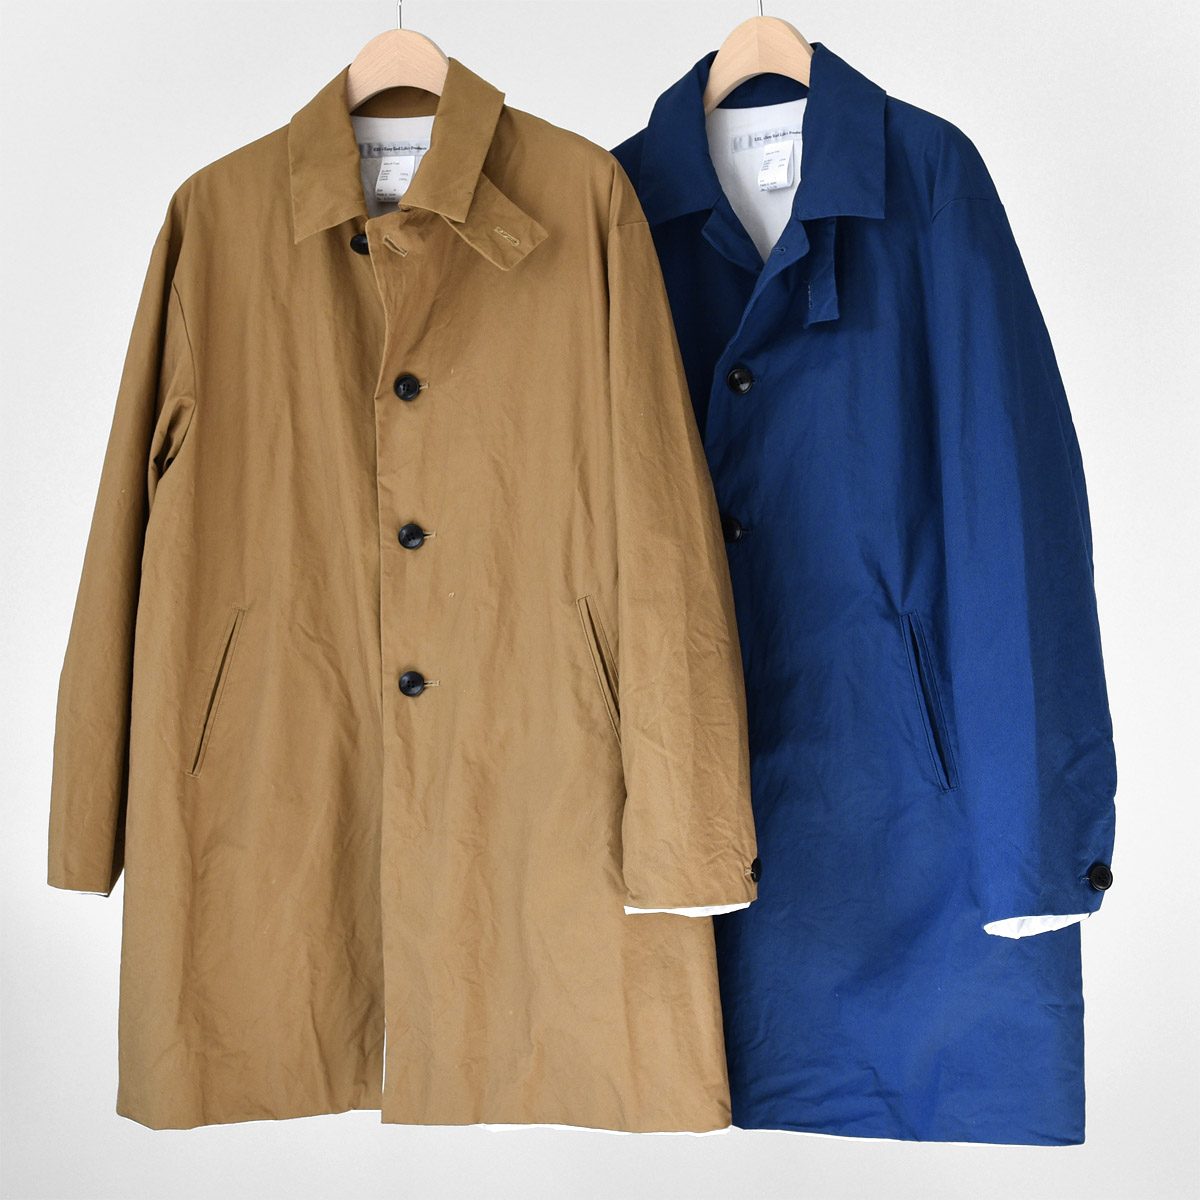 EEL Products Sakura Coat サクラコート - ステンカラーコート